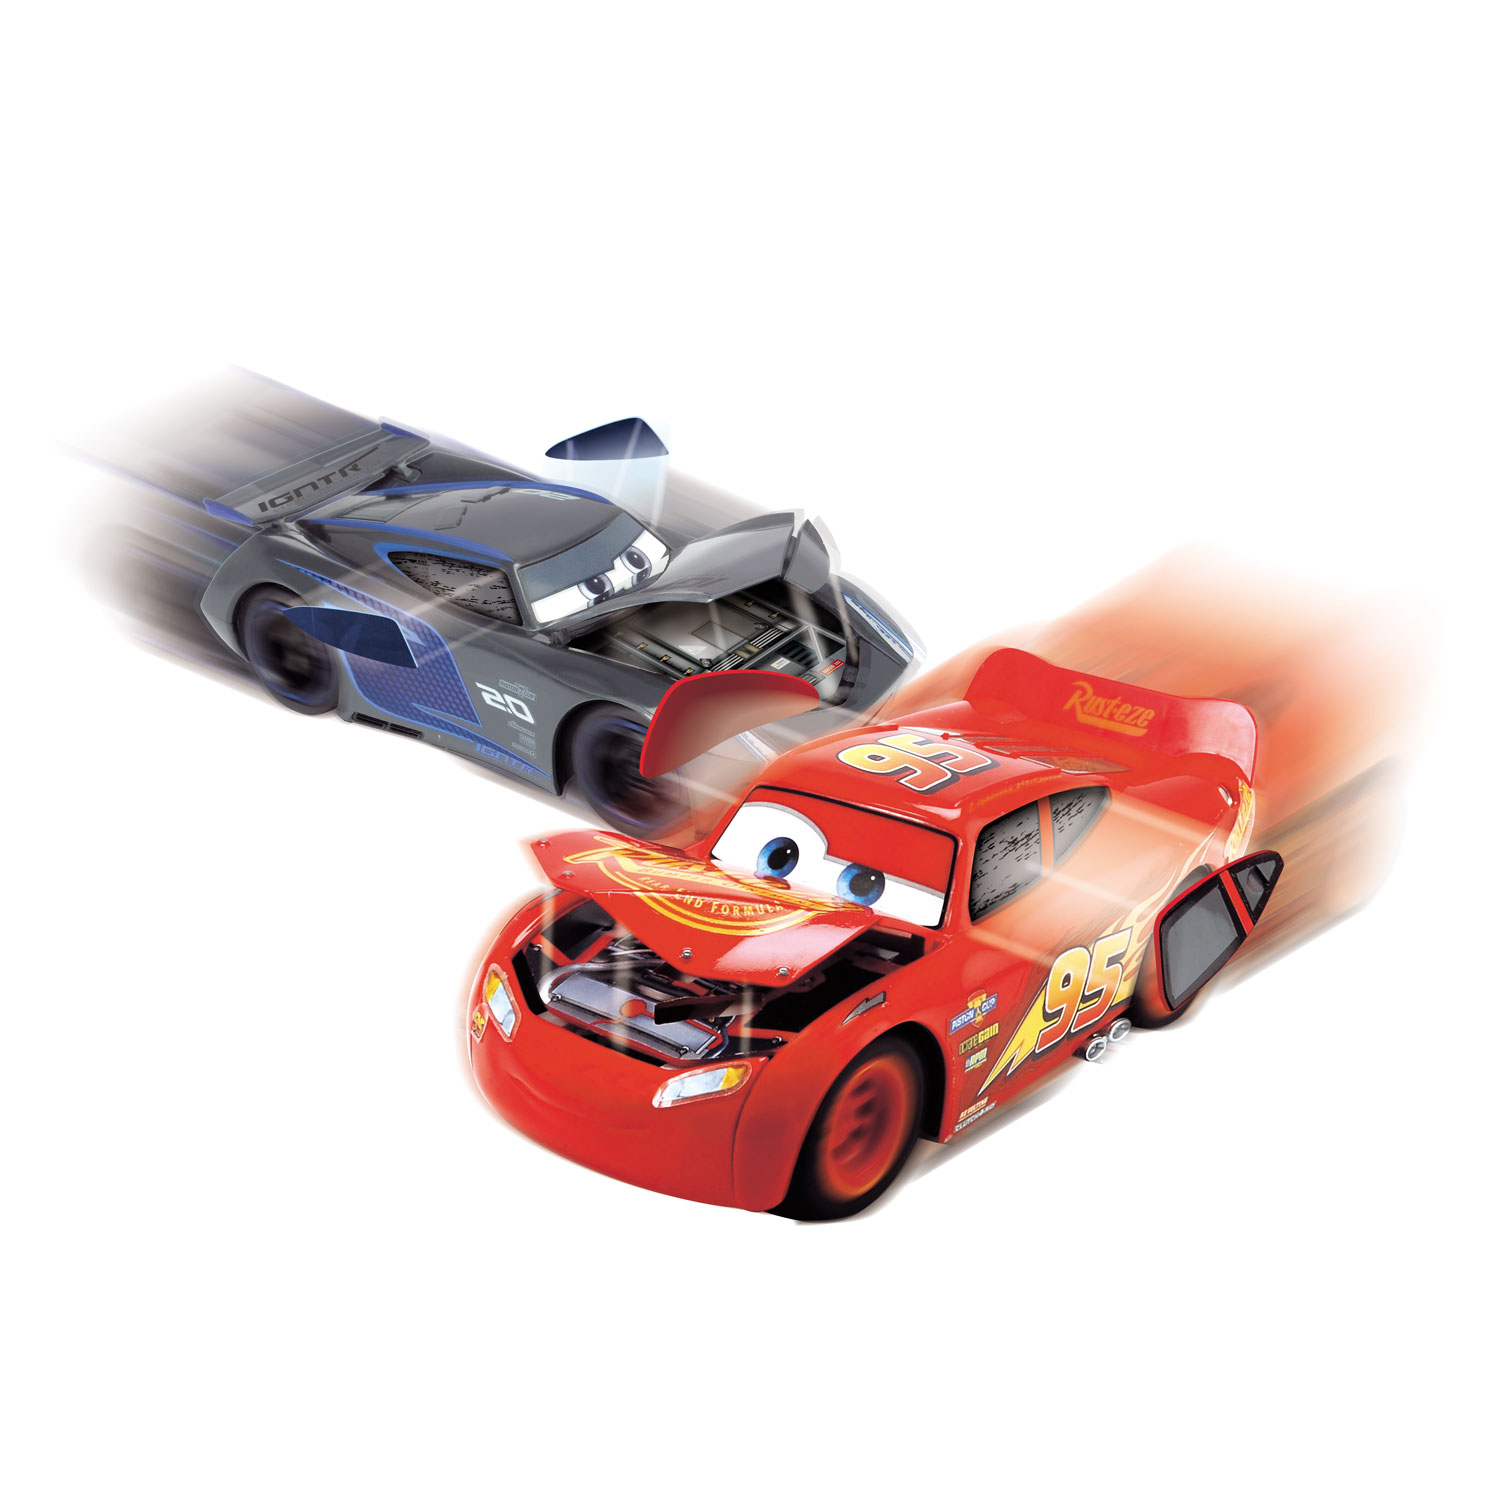 RC Cars 3 Crazy Crash - Lightning McQueen